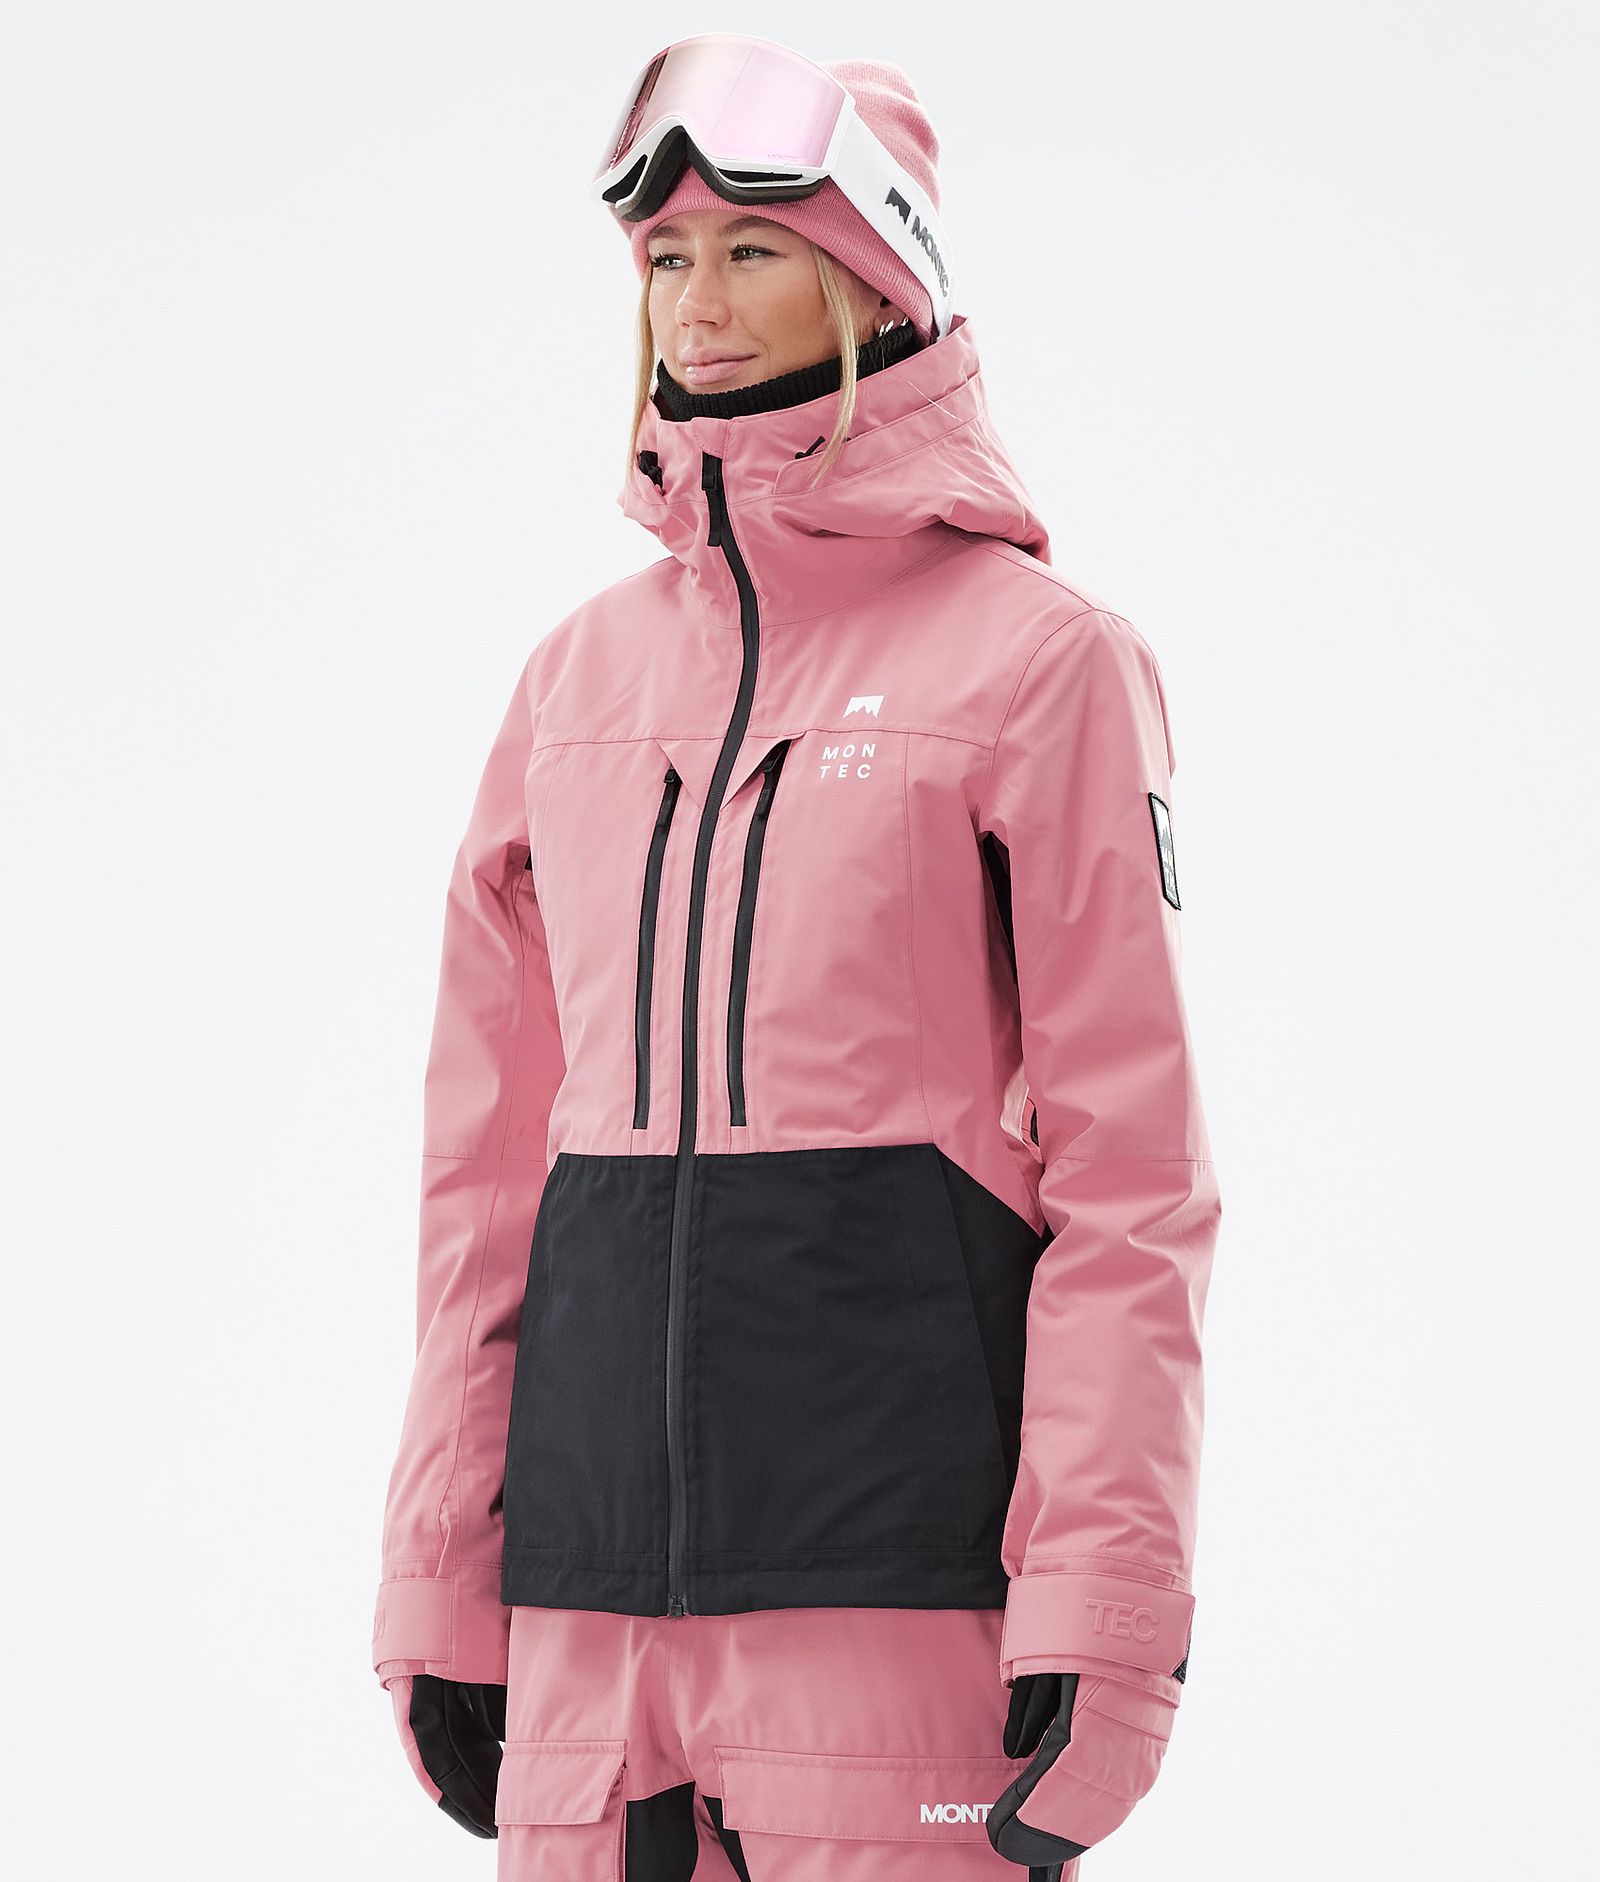 Moss W Snowboard Jacket Women Pink/Black, Image 1 of 10